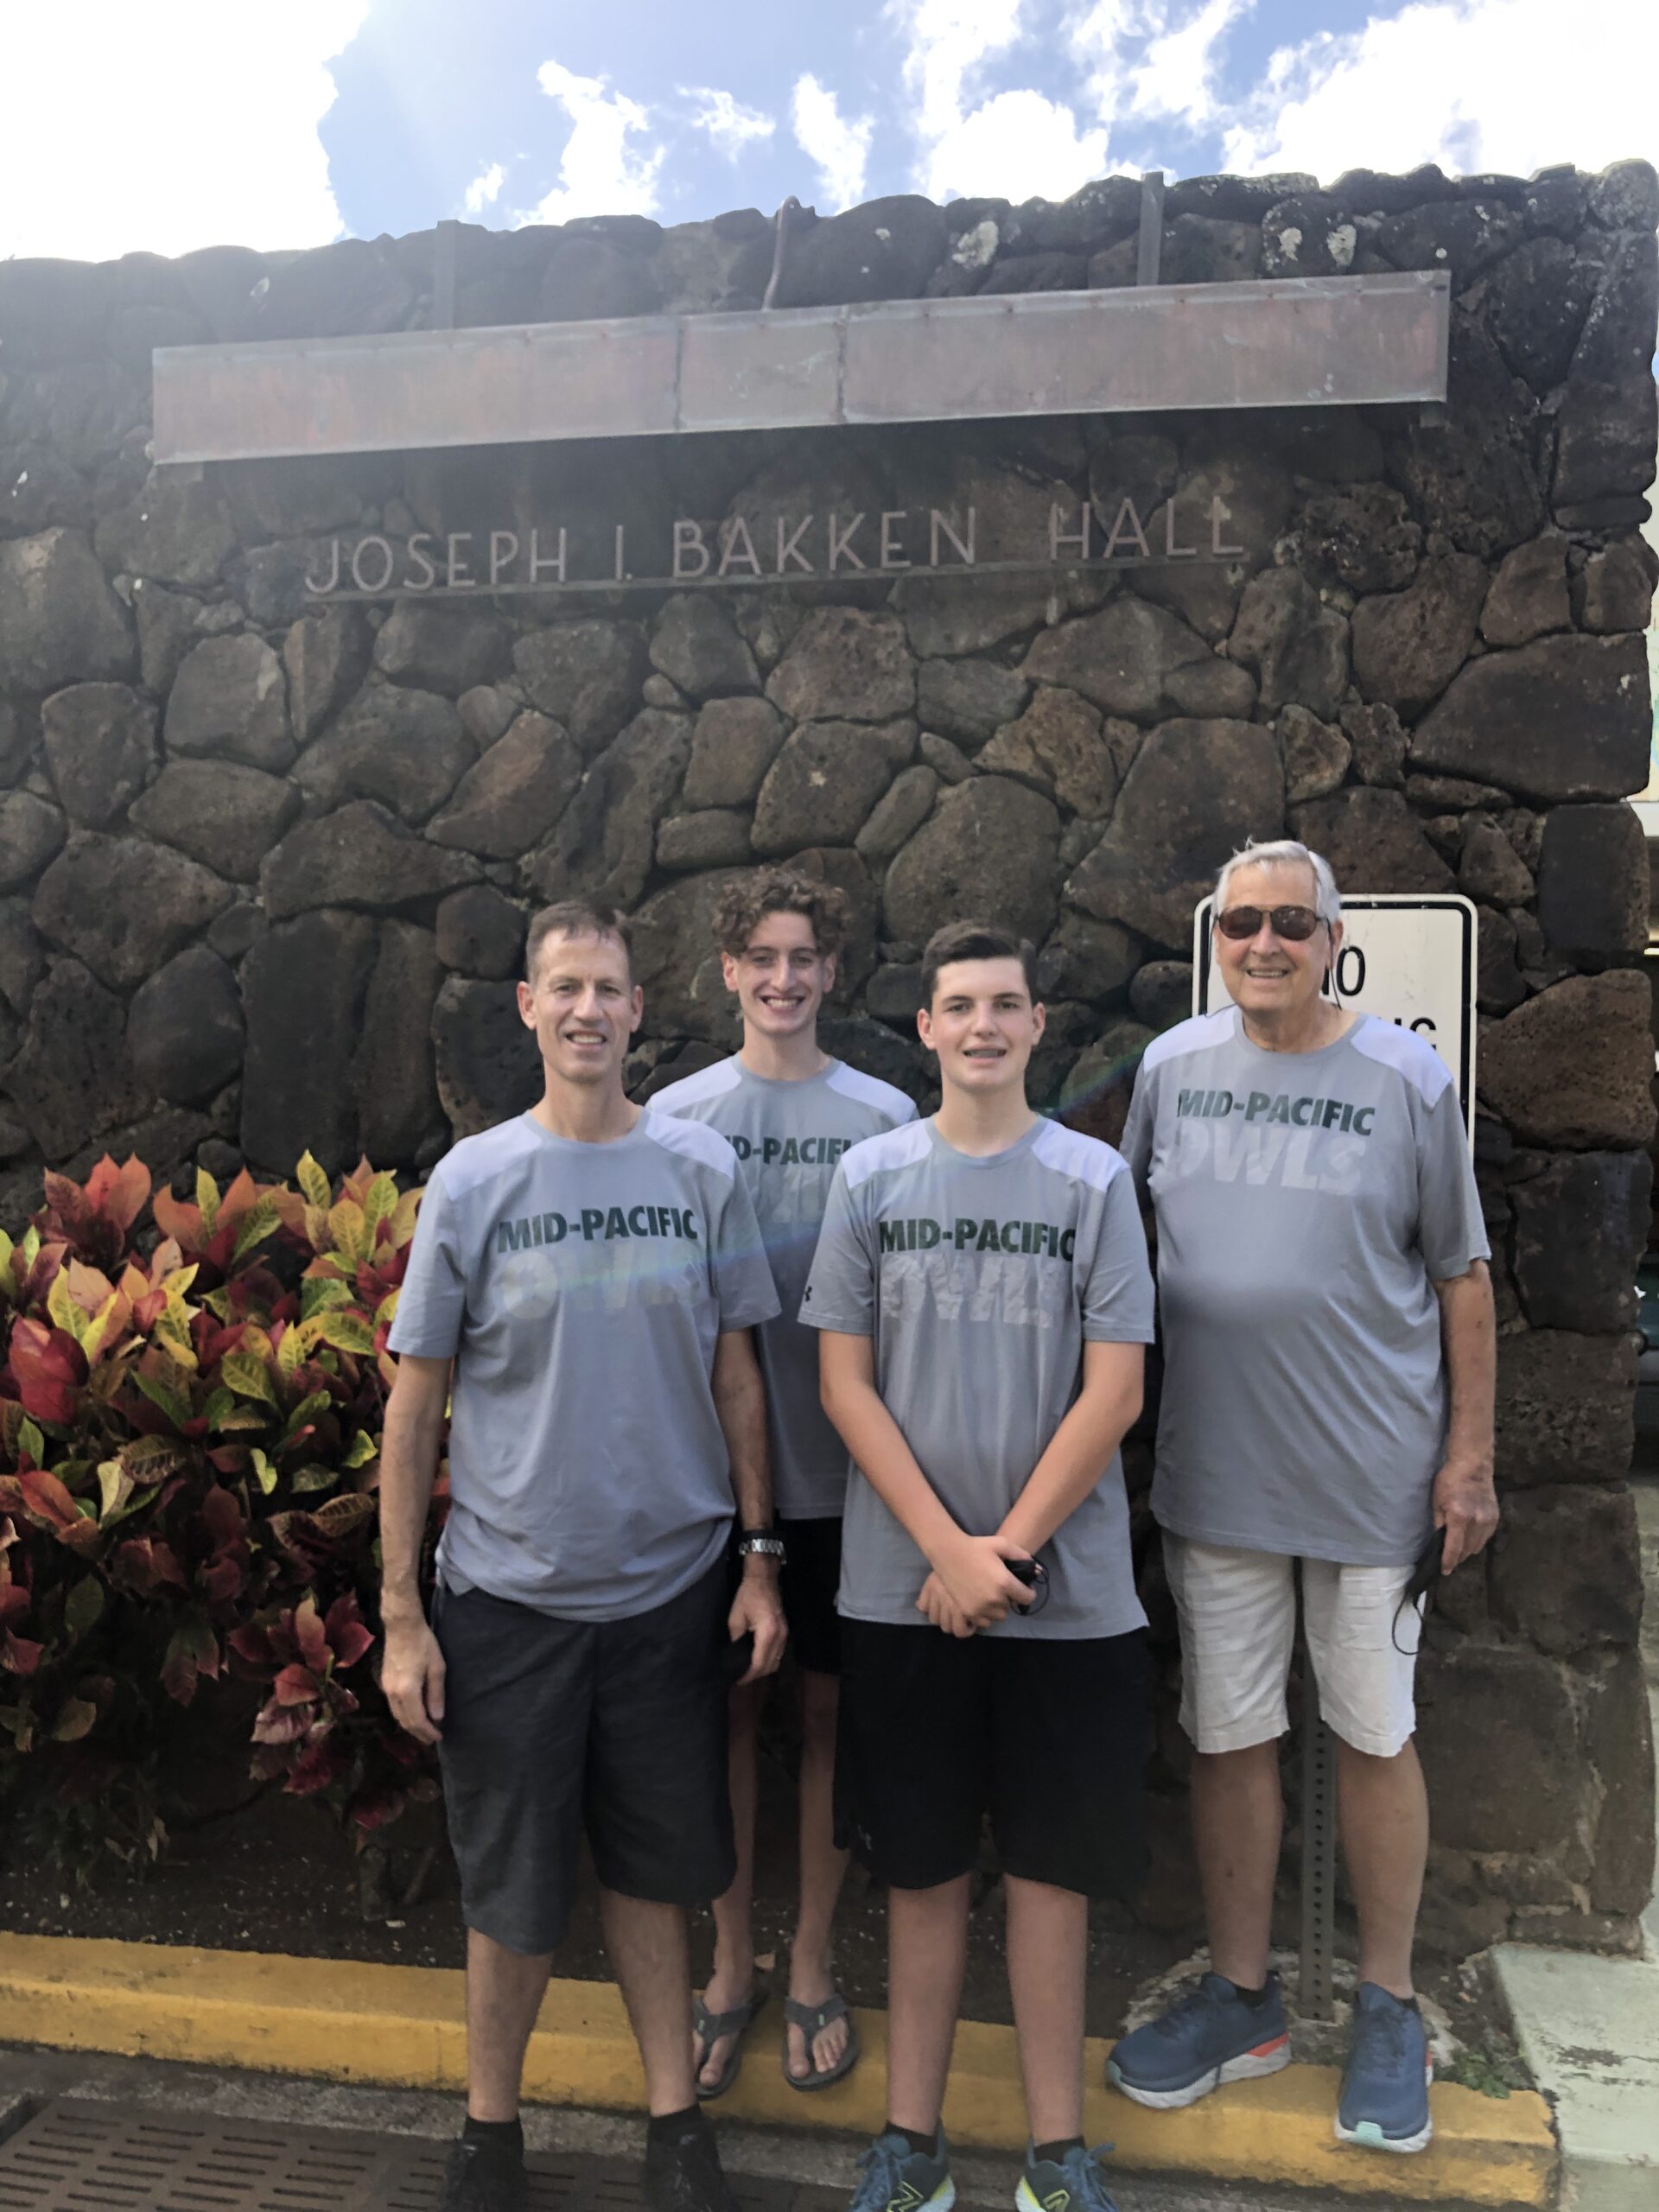 The Bakken Family Returns Home to Mid-Pacific